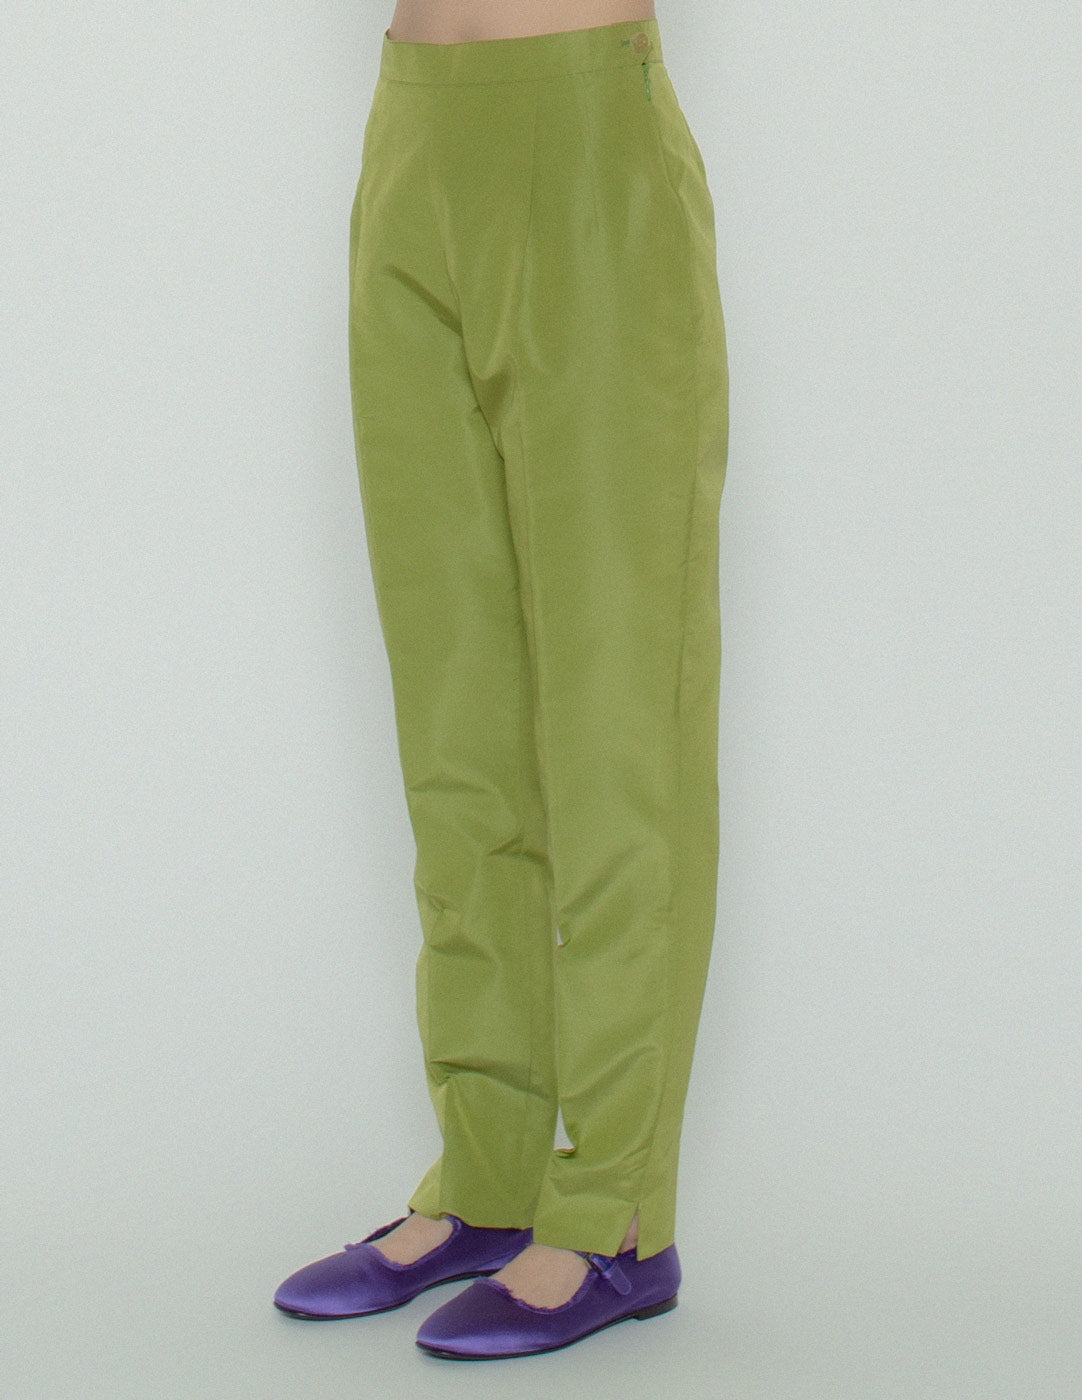 Prada chartreuse green silk trousers side detail